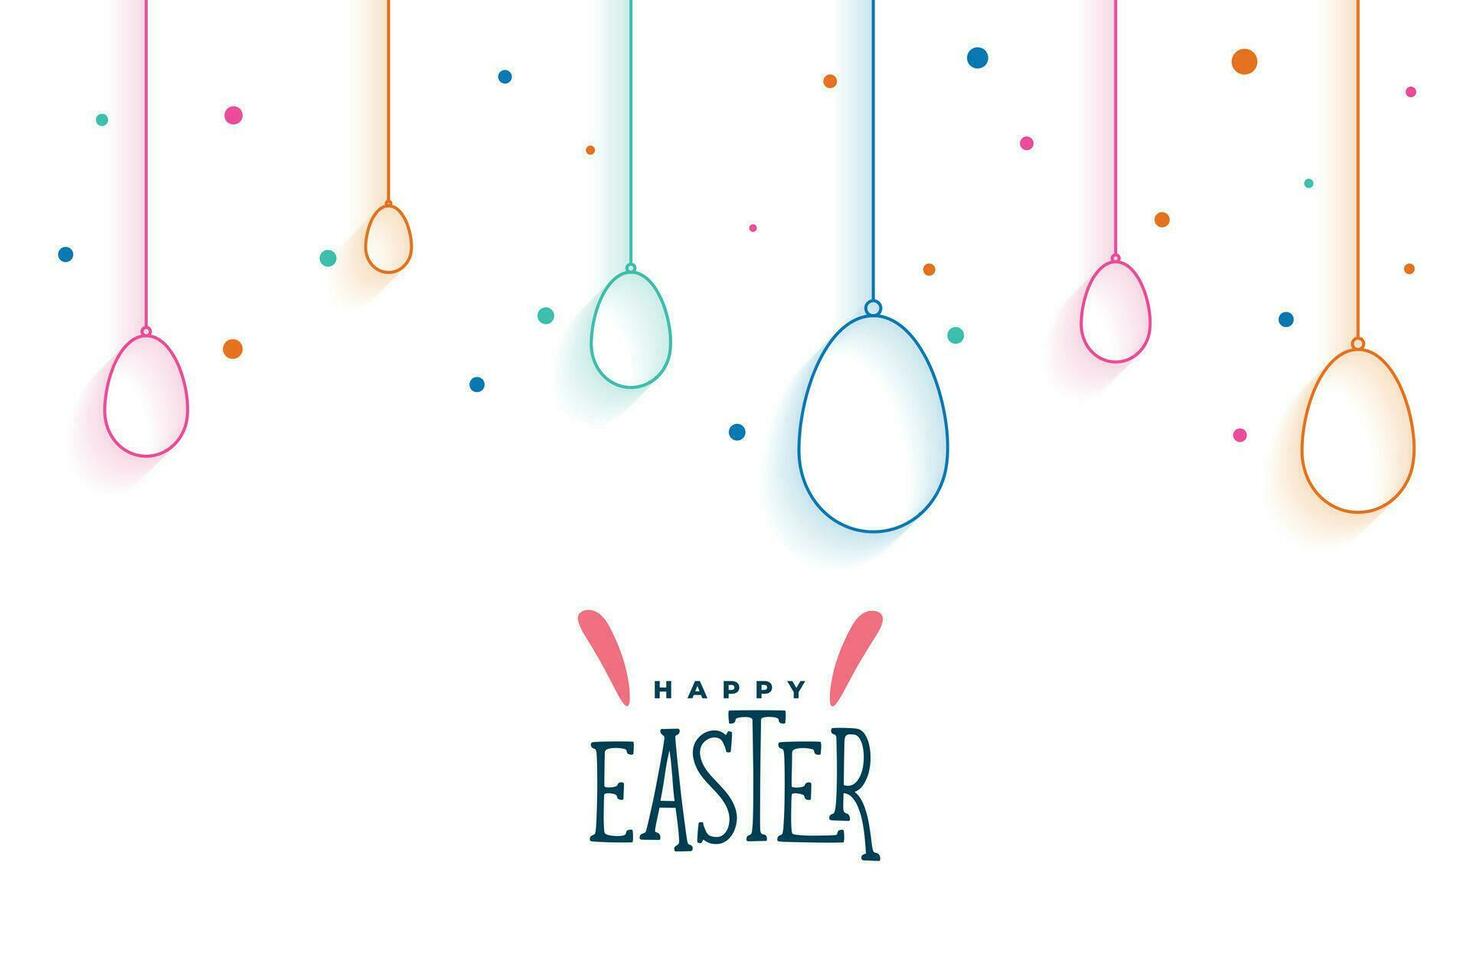 contento Pascua de Resurrección tarjeta con vistoso huevos vector